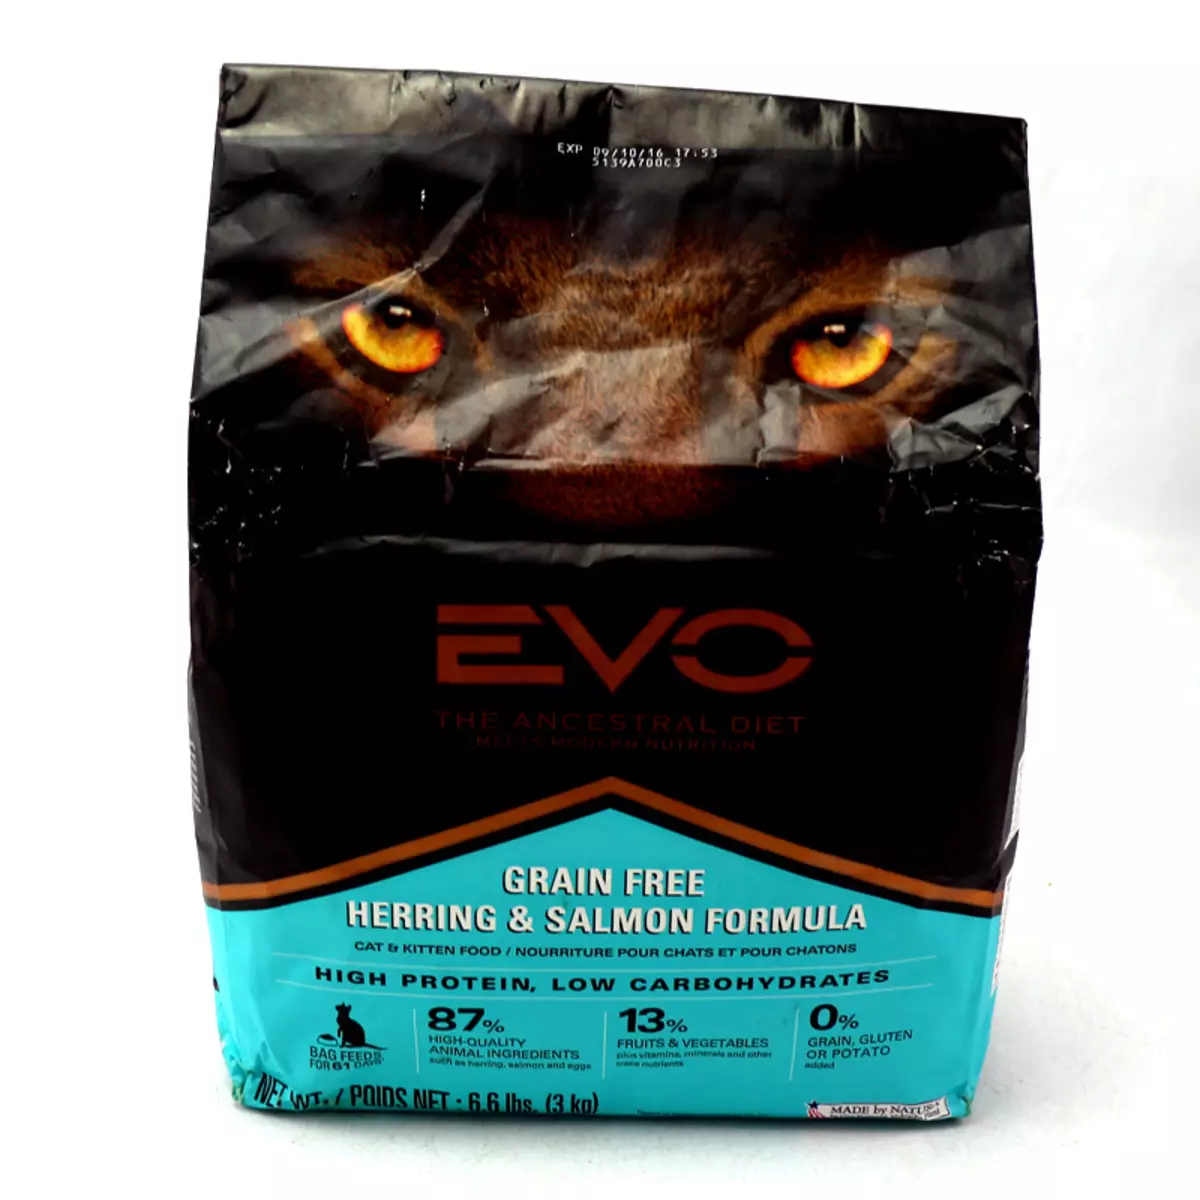 INNOVAL EVO FEED: za mačke i pse, suhi i vlažni feed, pluses i kontra, recenzije 11335_8